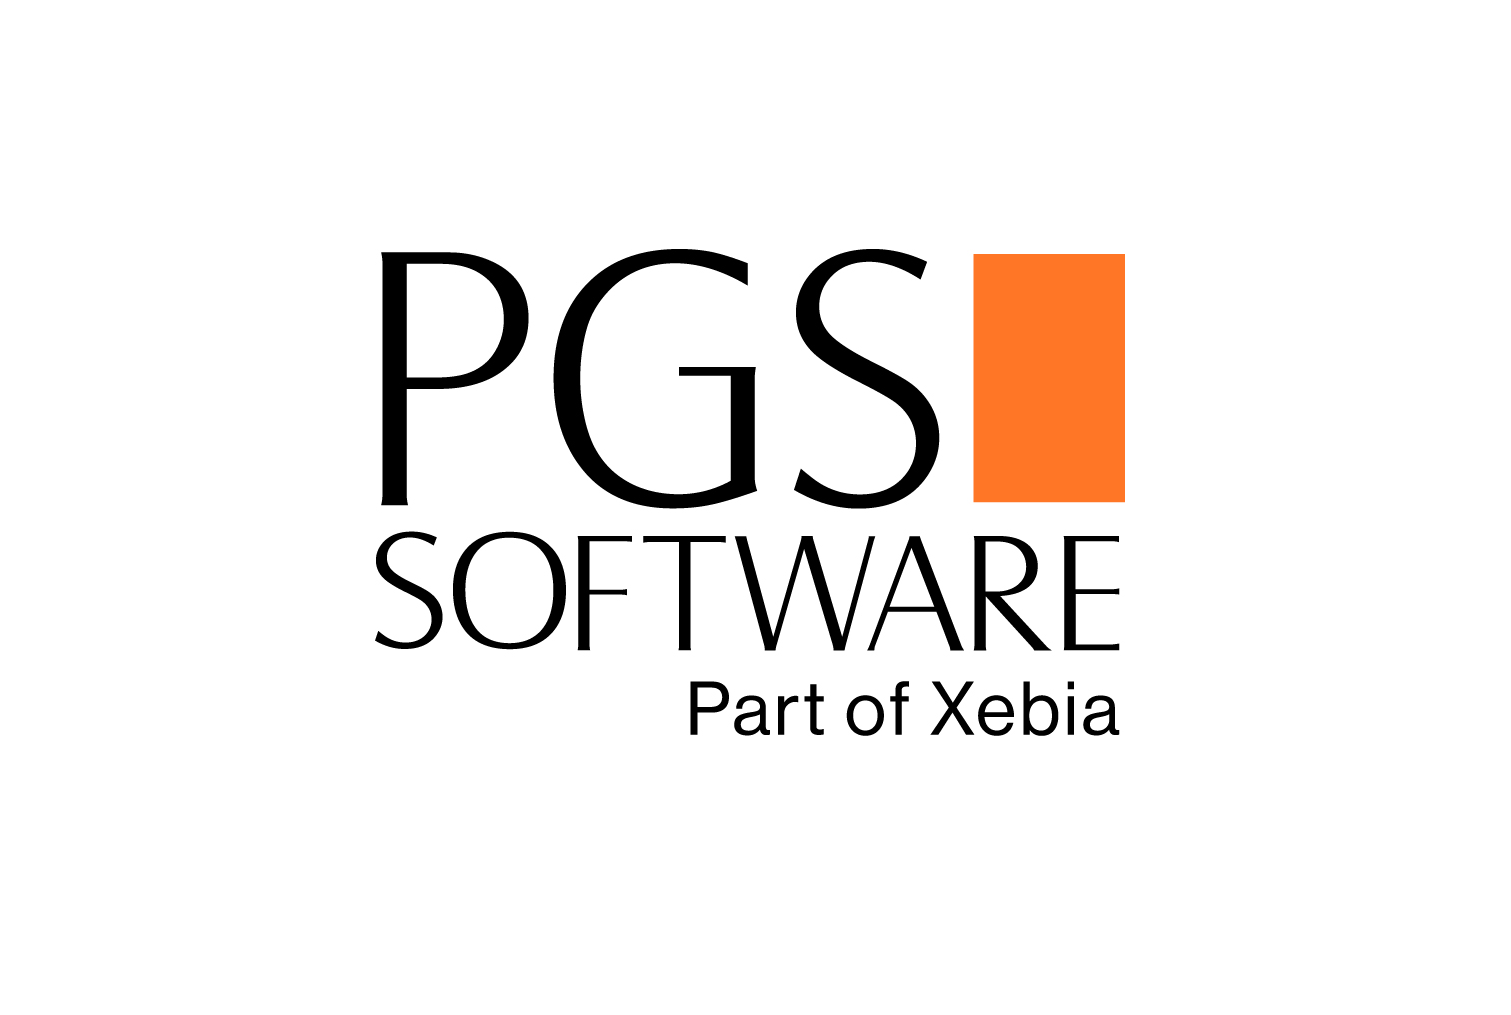 PGS Software logo